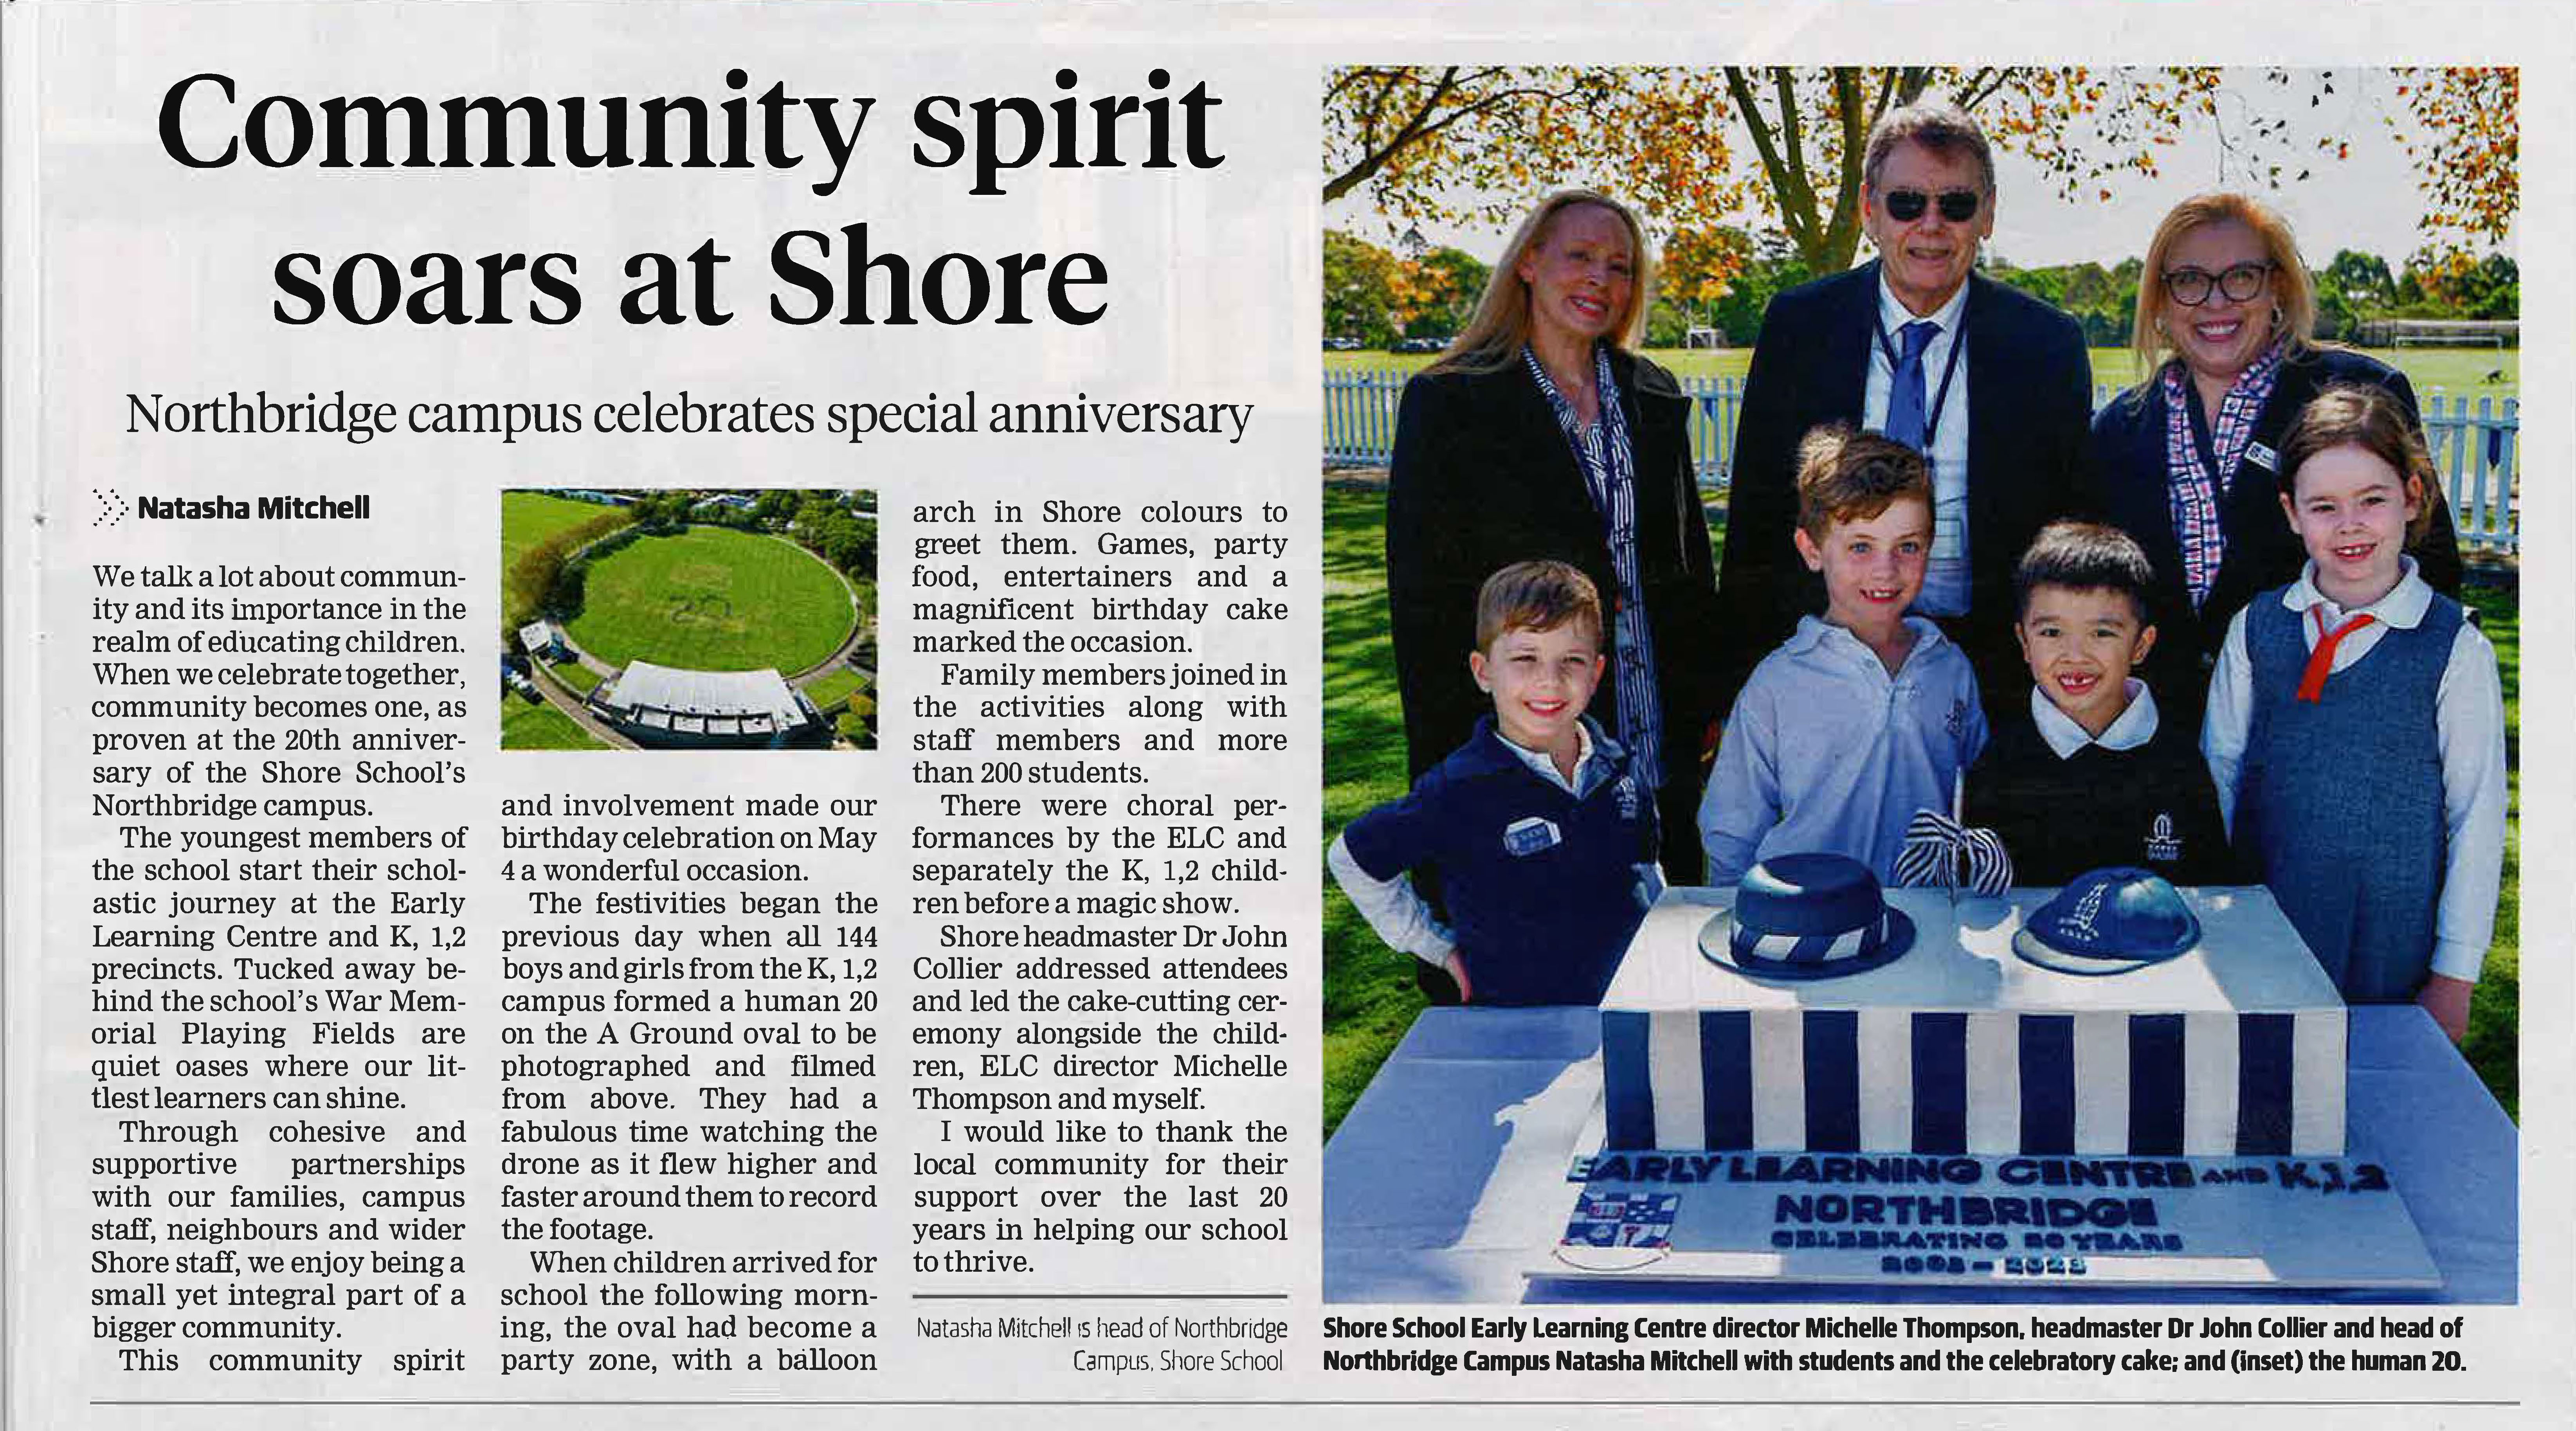 Community spirit soars at Shore